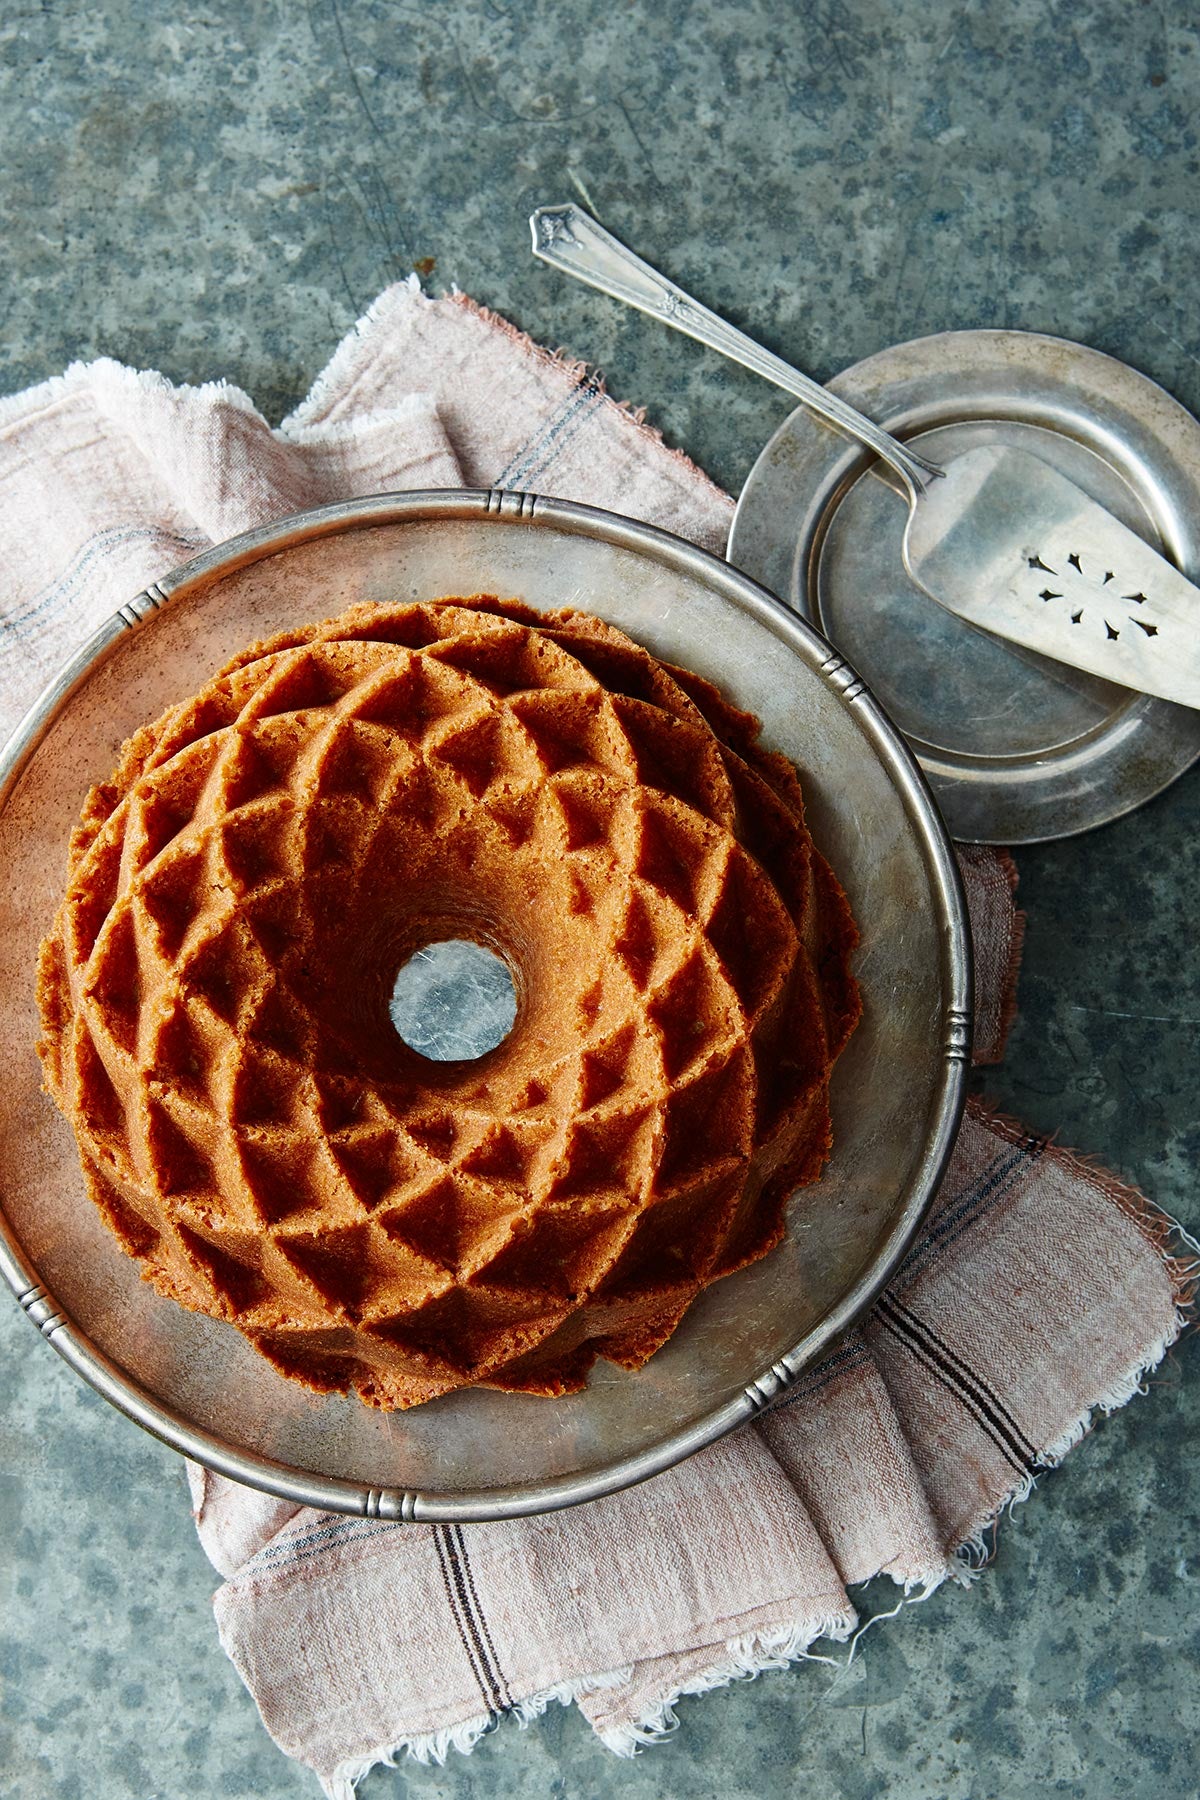 https://www.kingarthurbaking.com/sites/default/files/blog-images/2015/11/Bundt-cake-bliss-brown-sugar-sour-cream.jpg